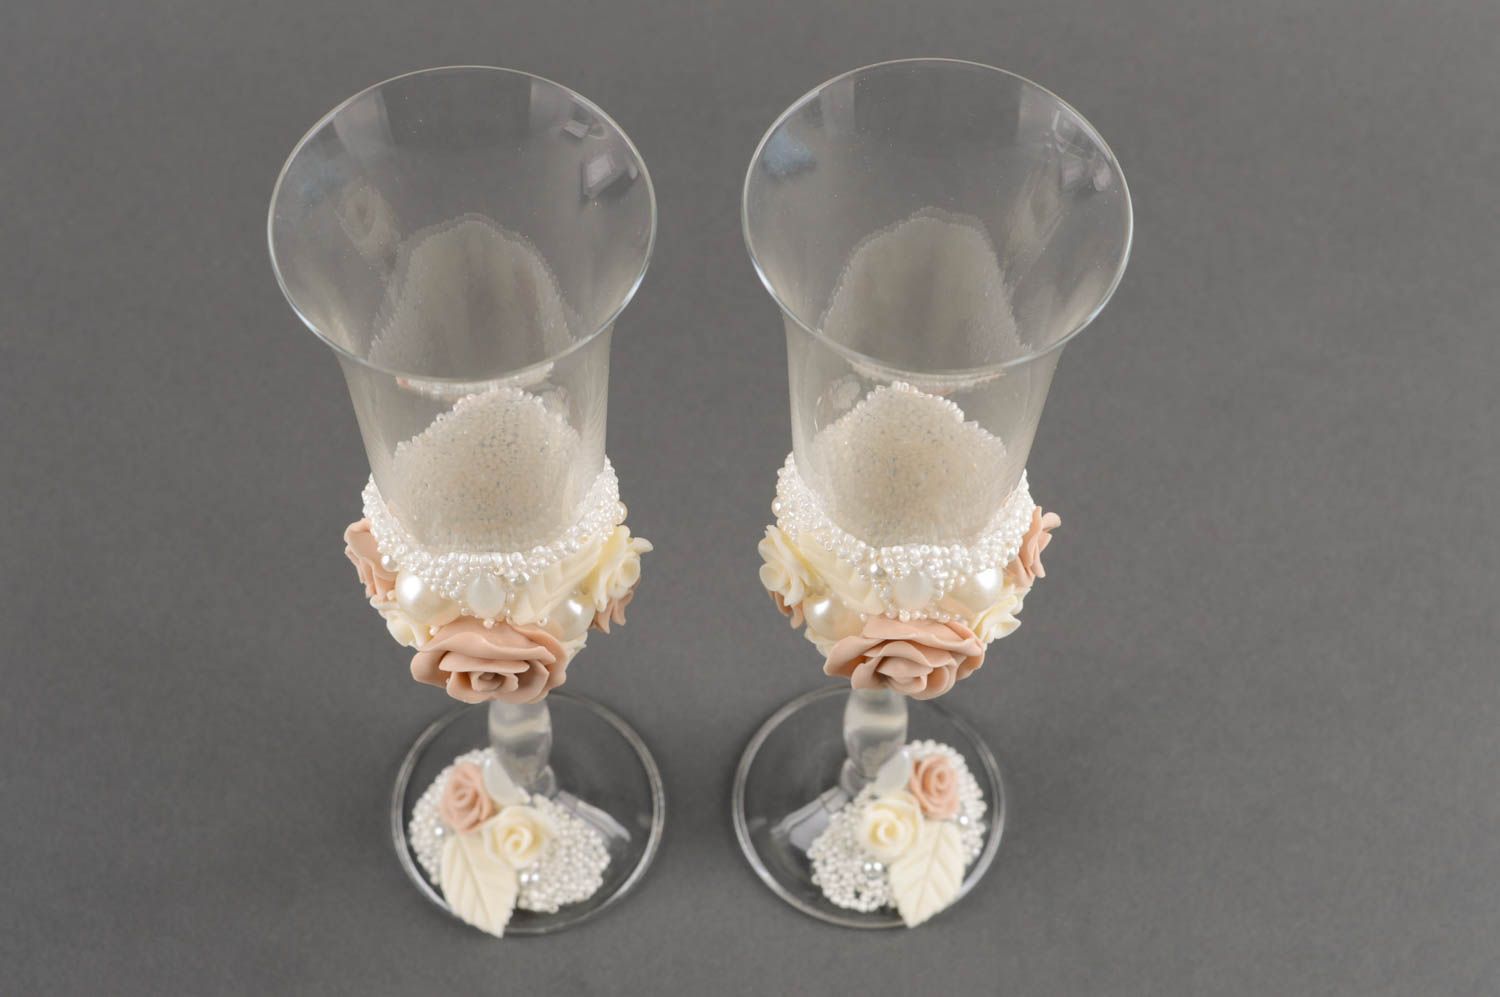 Best wine glasses wedding champagne glasses handmade wedding accessories photo 5